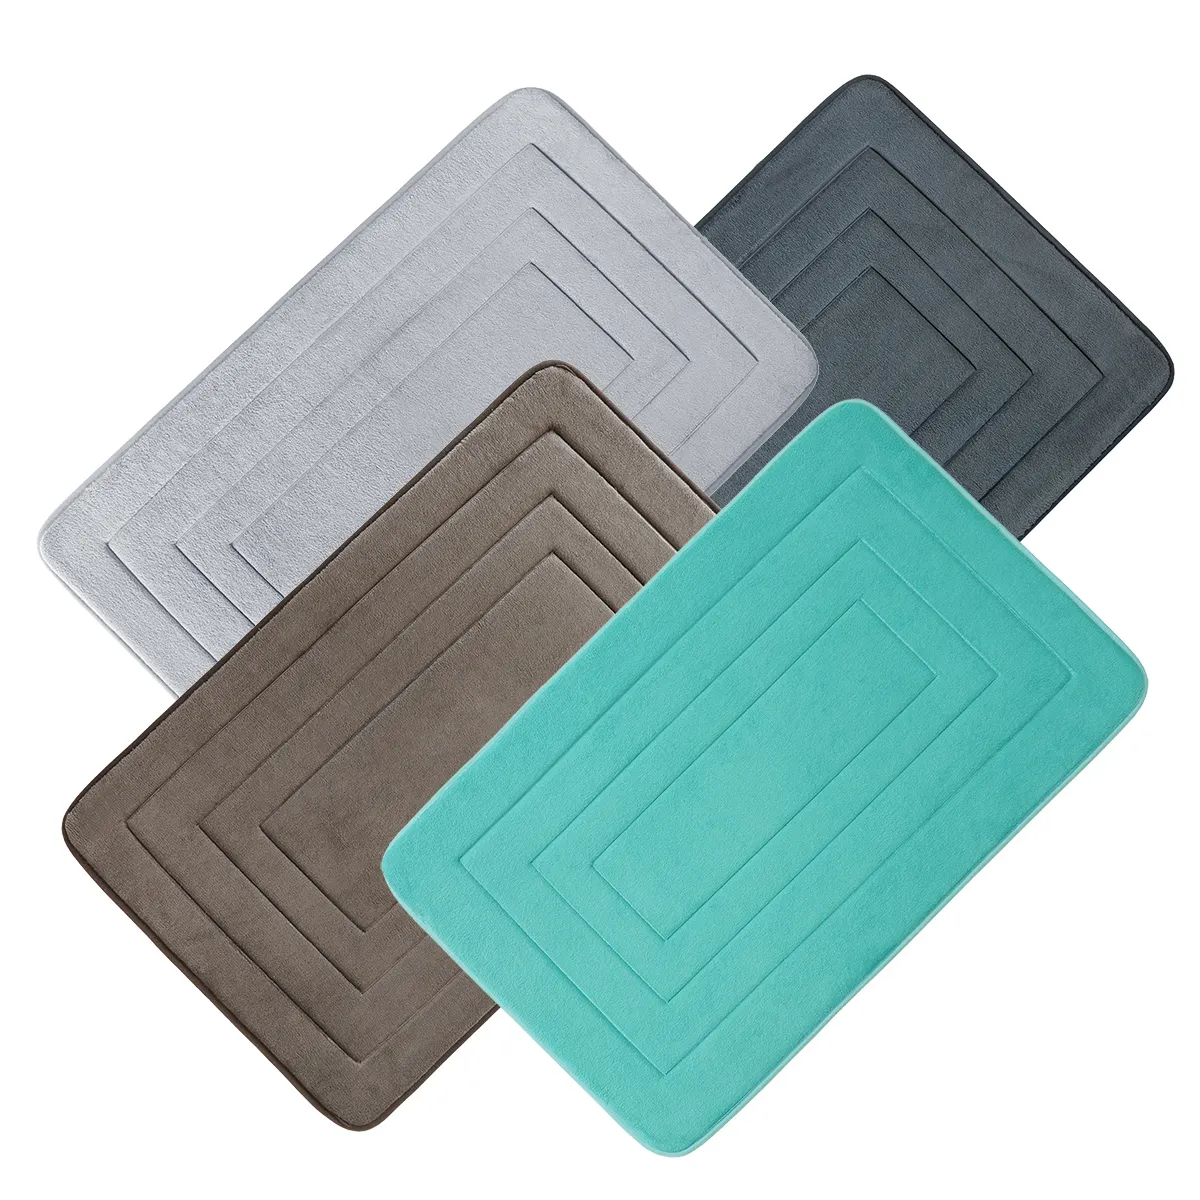 Embossed microfiber bath mat Water-absorbing soft foot mat solid color non-slip PVC bathroom floor mat